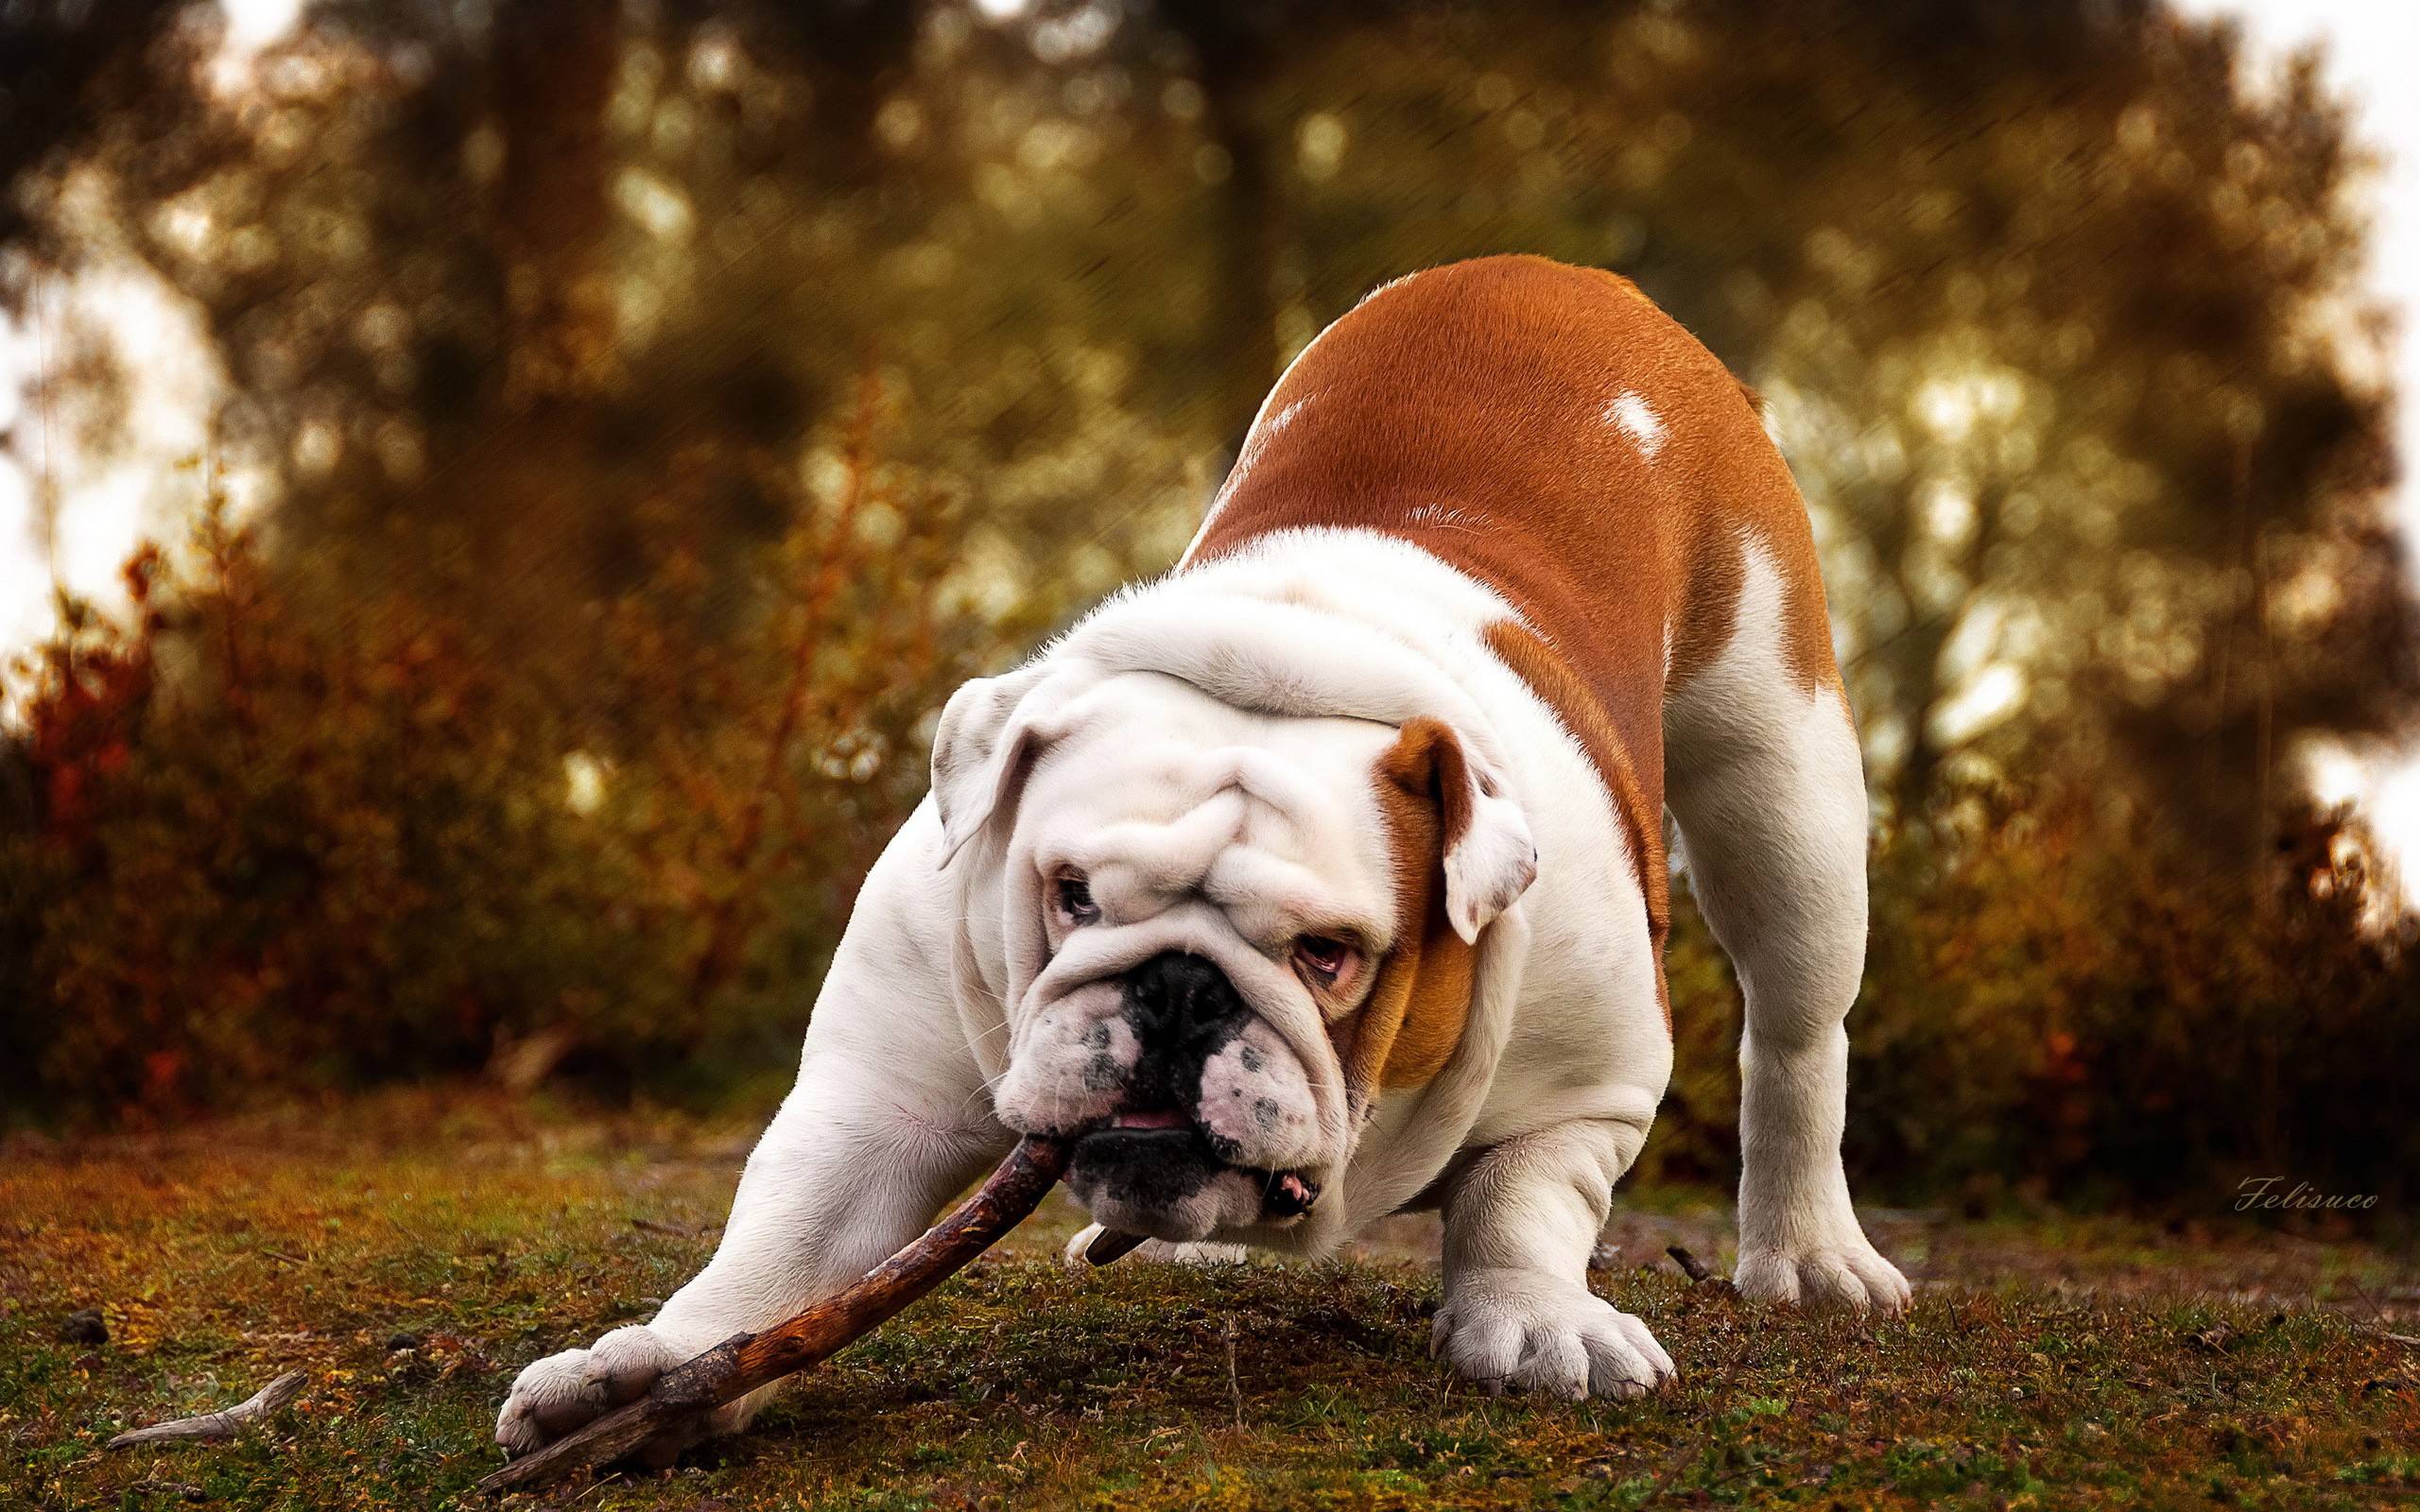 Best Bulldog Animal Wallpaper Full HD #6799 Wallpaper | High ...